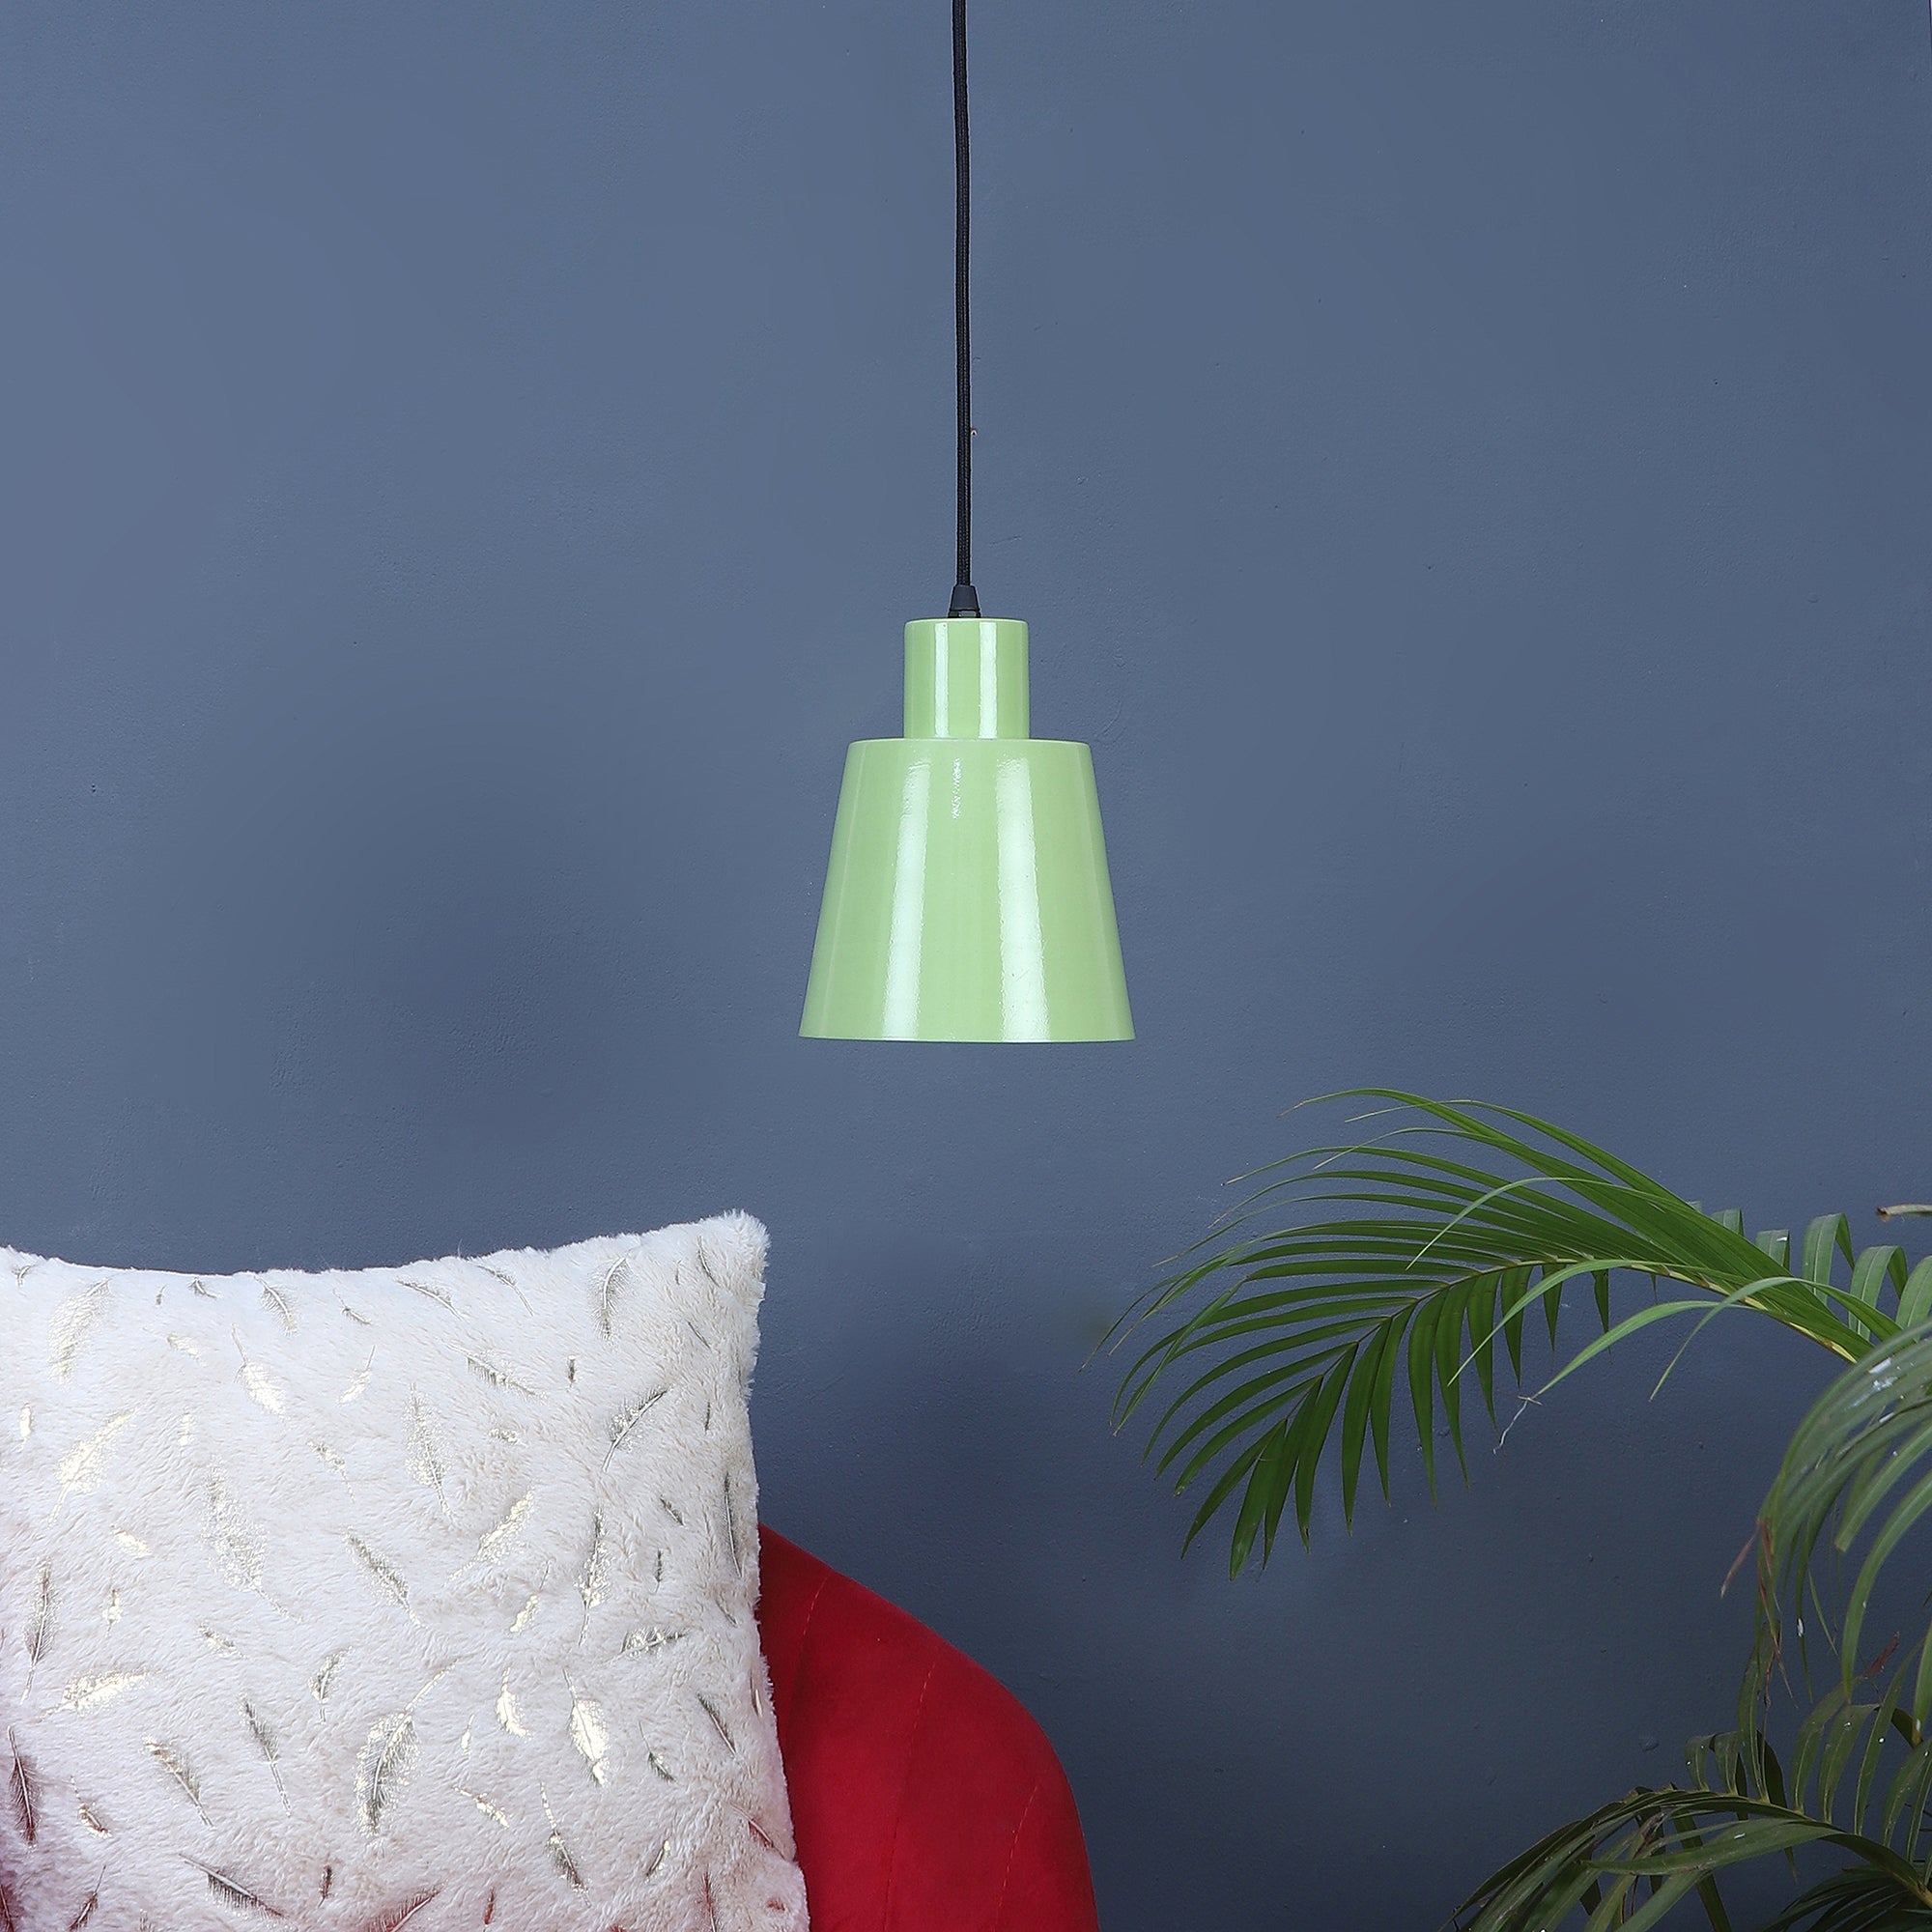 Formul Green Metal Hanging Light by SS Lightings